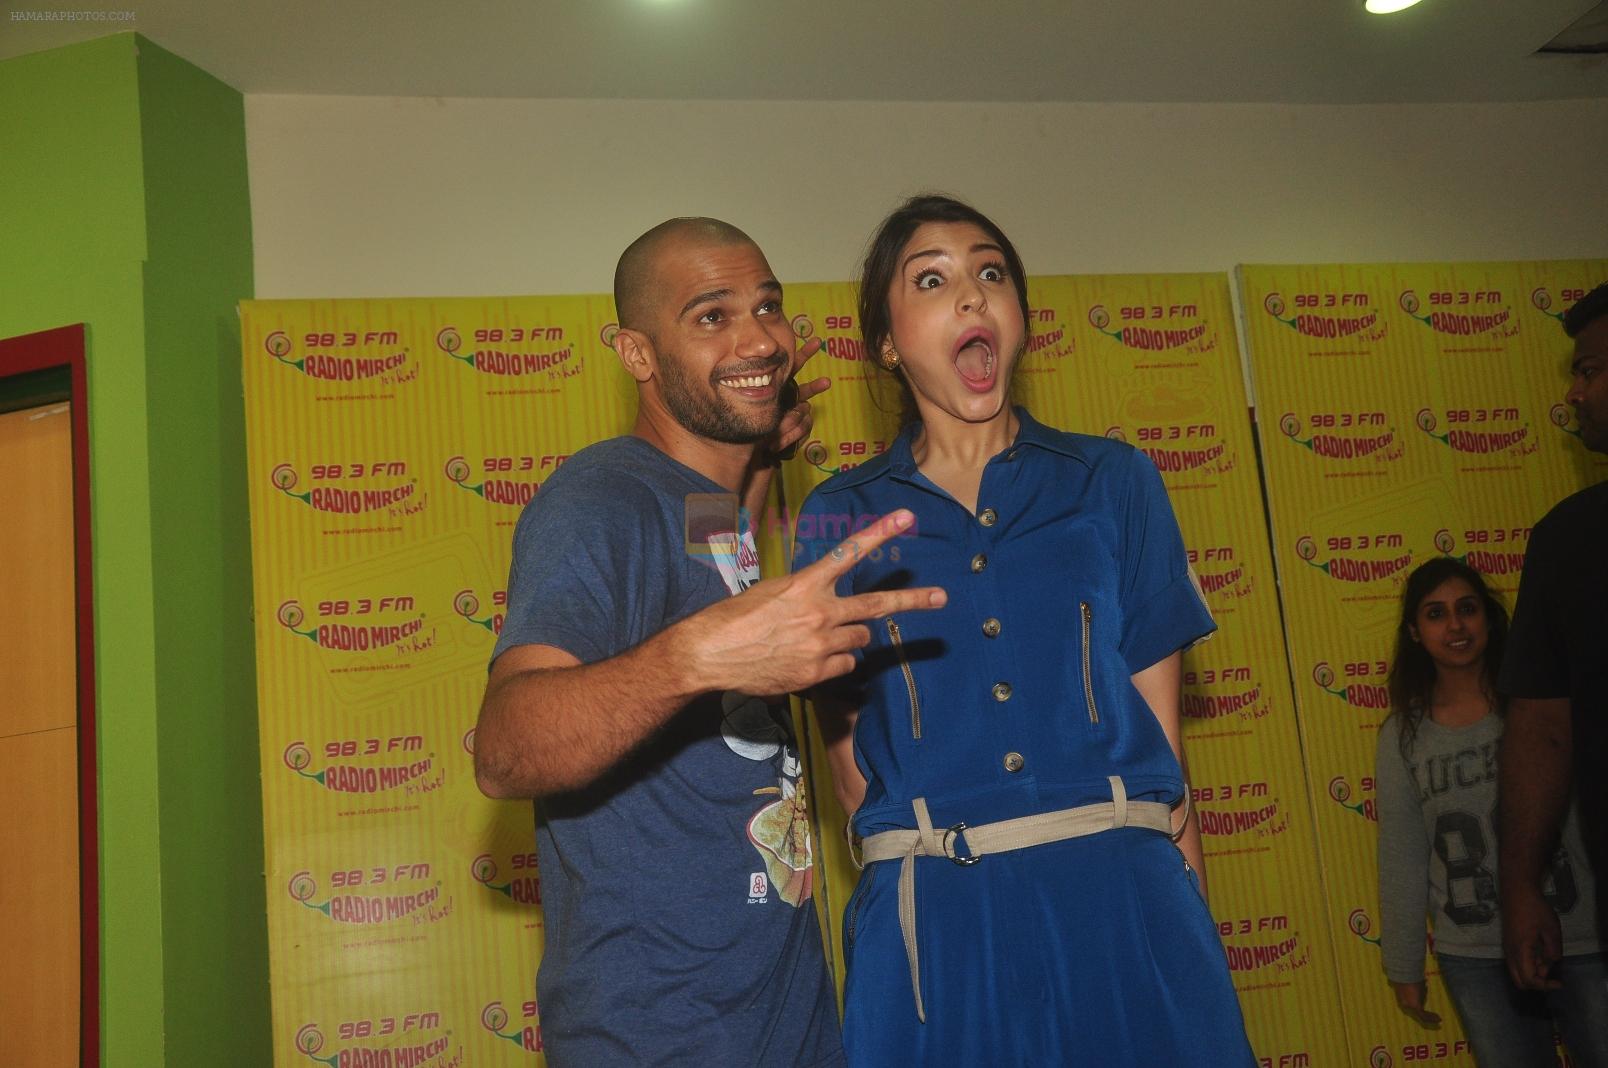 Anushka Sharma and Neil Bhoopalam at Radio Mirchi studio for promotion of NH10